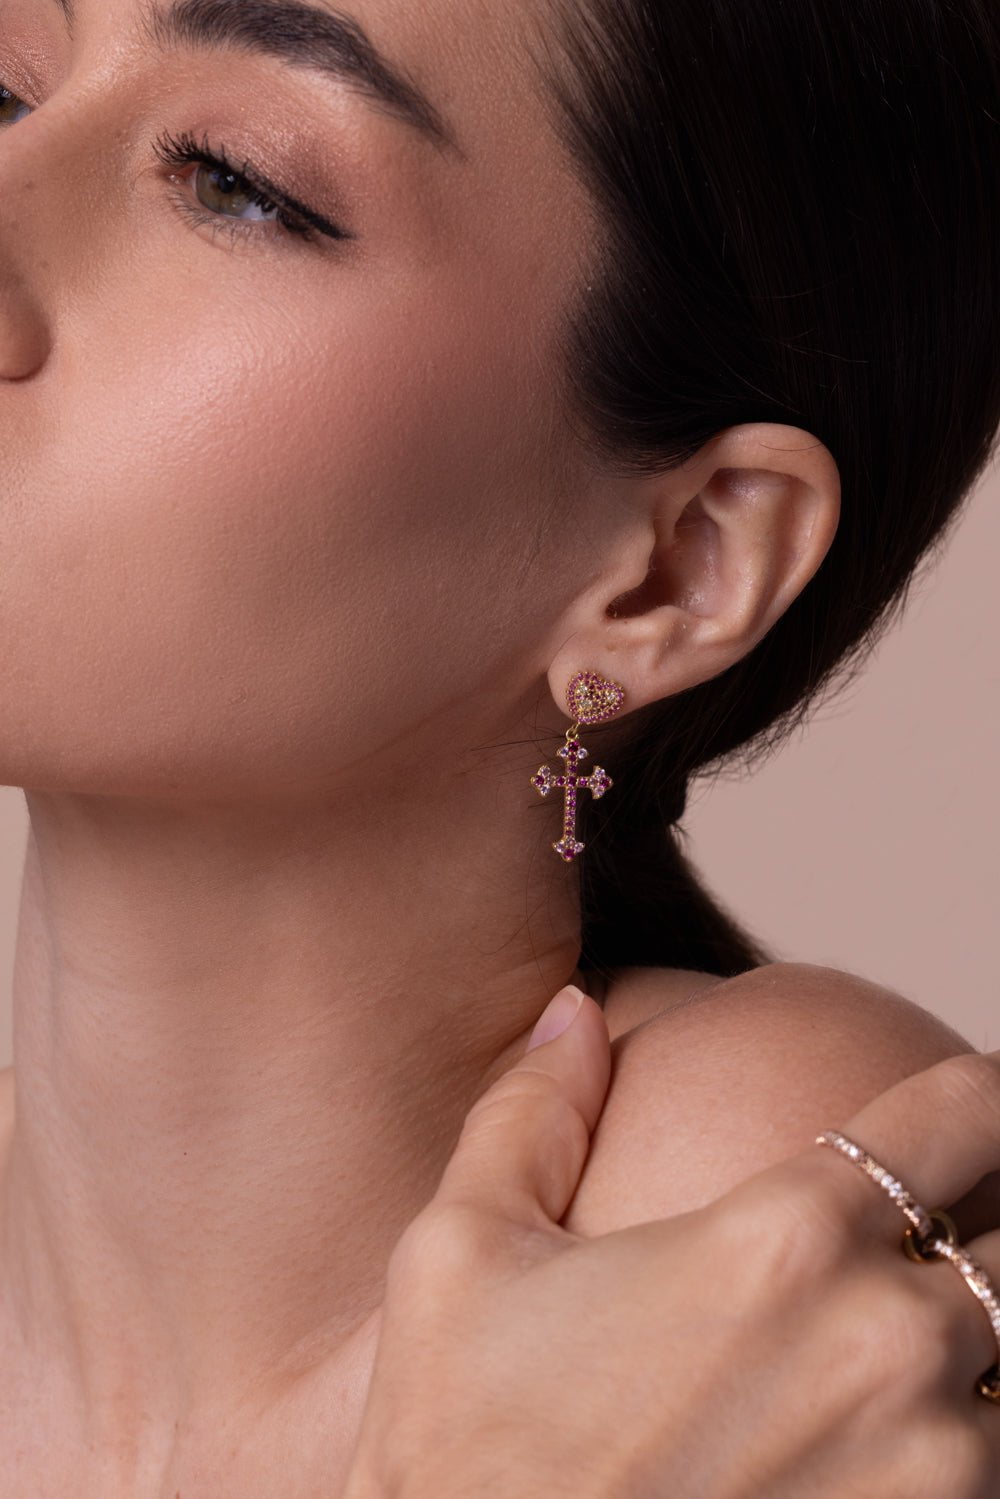 TANYA FARAH-Pink Sapphire Cross Earrings-YELLOW GOLD